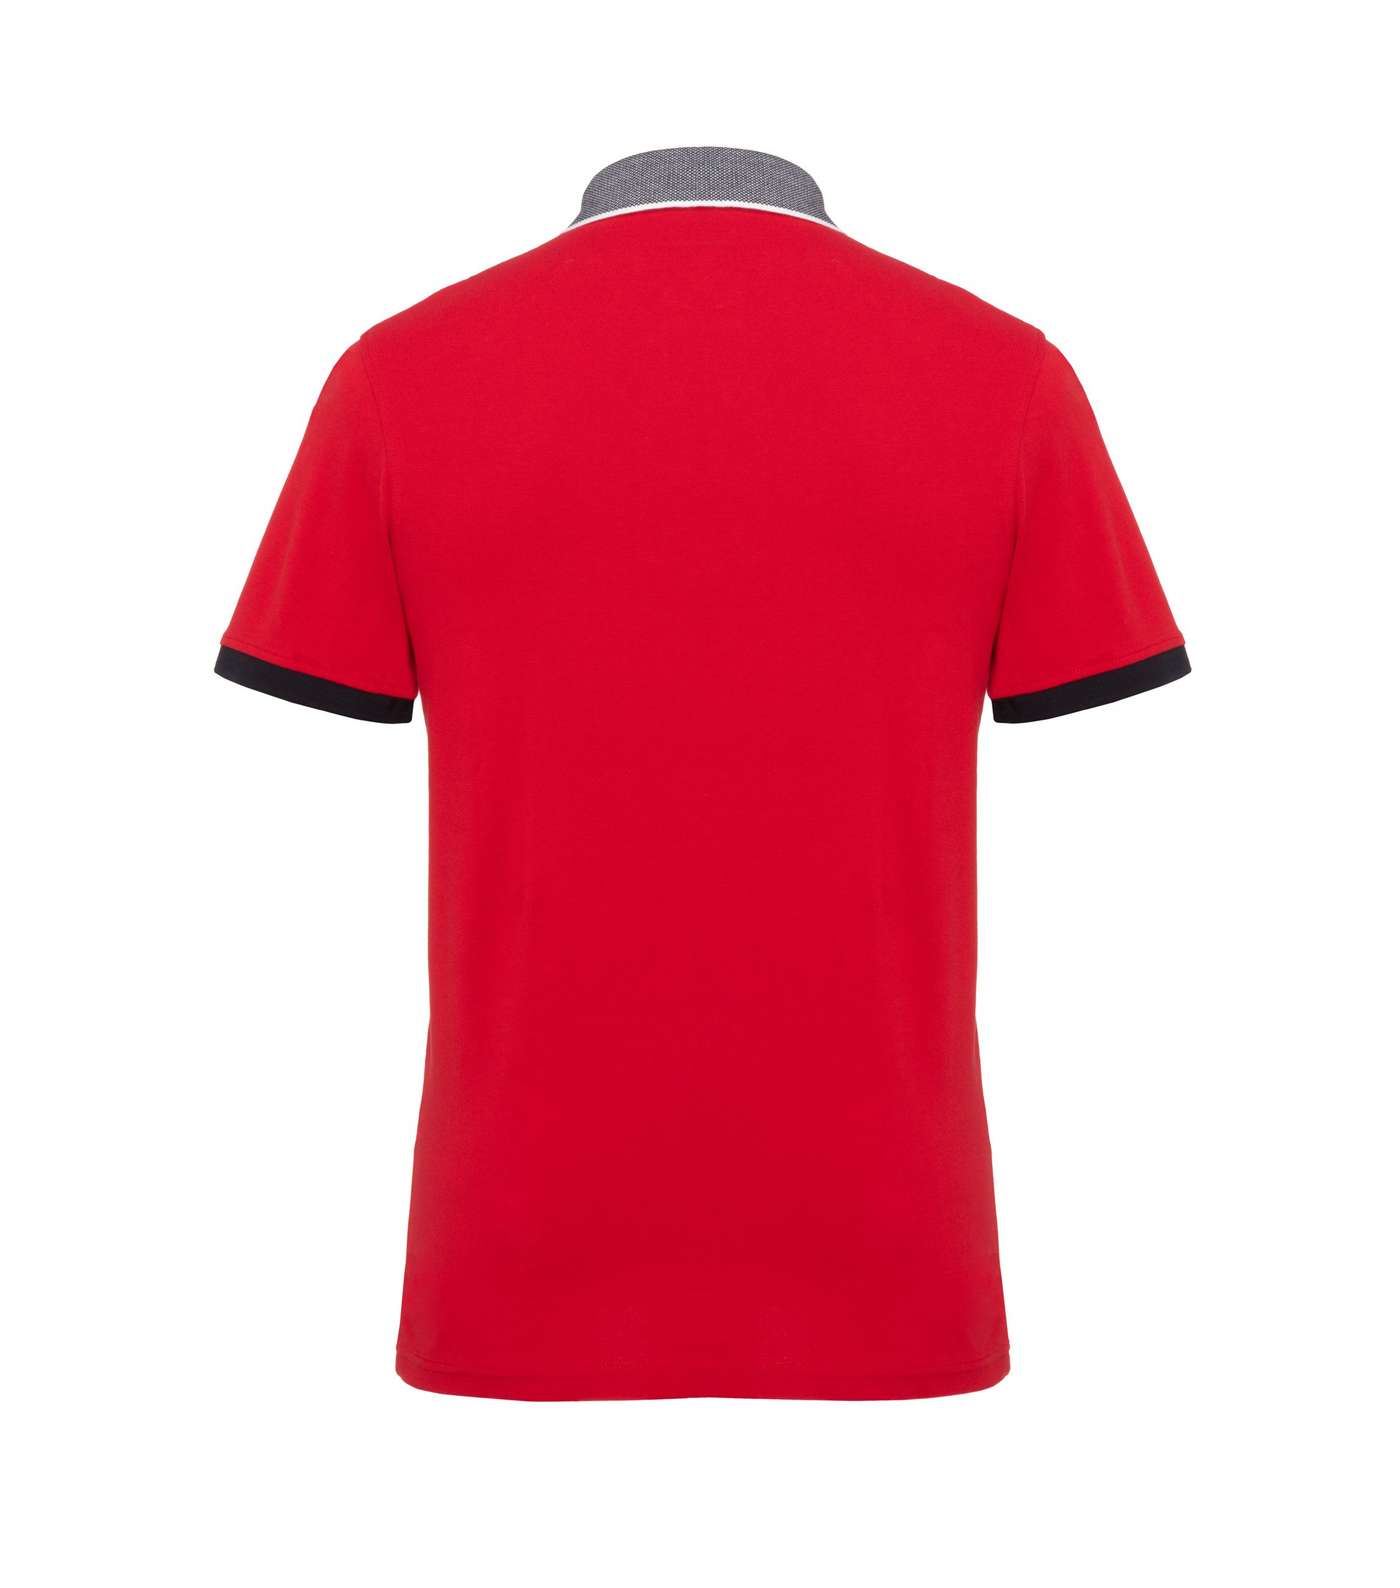 Jack & Jones Red Colour Block Polo Shirt Image 2